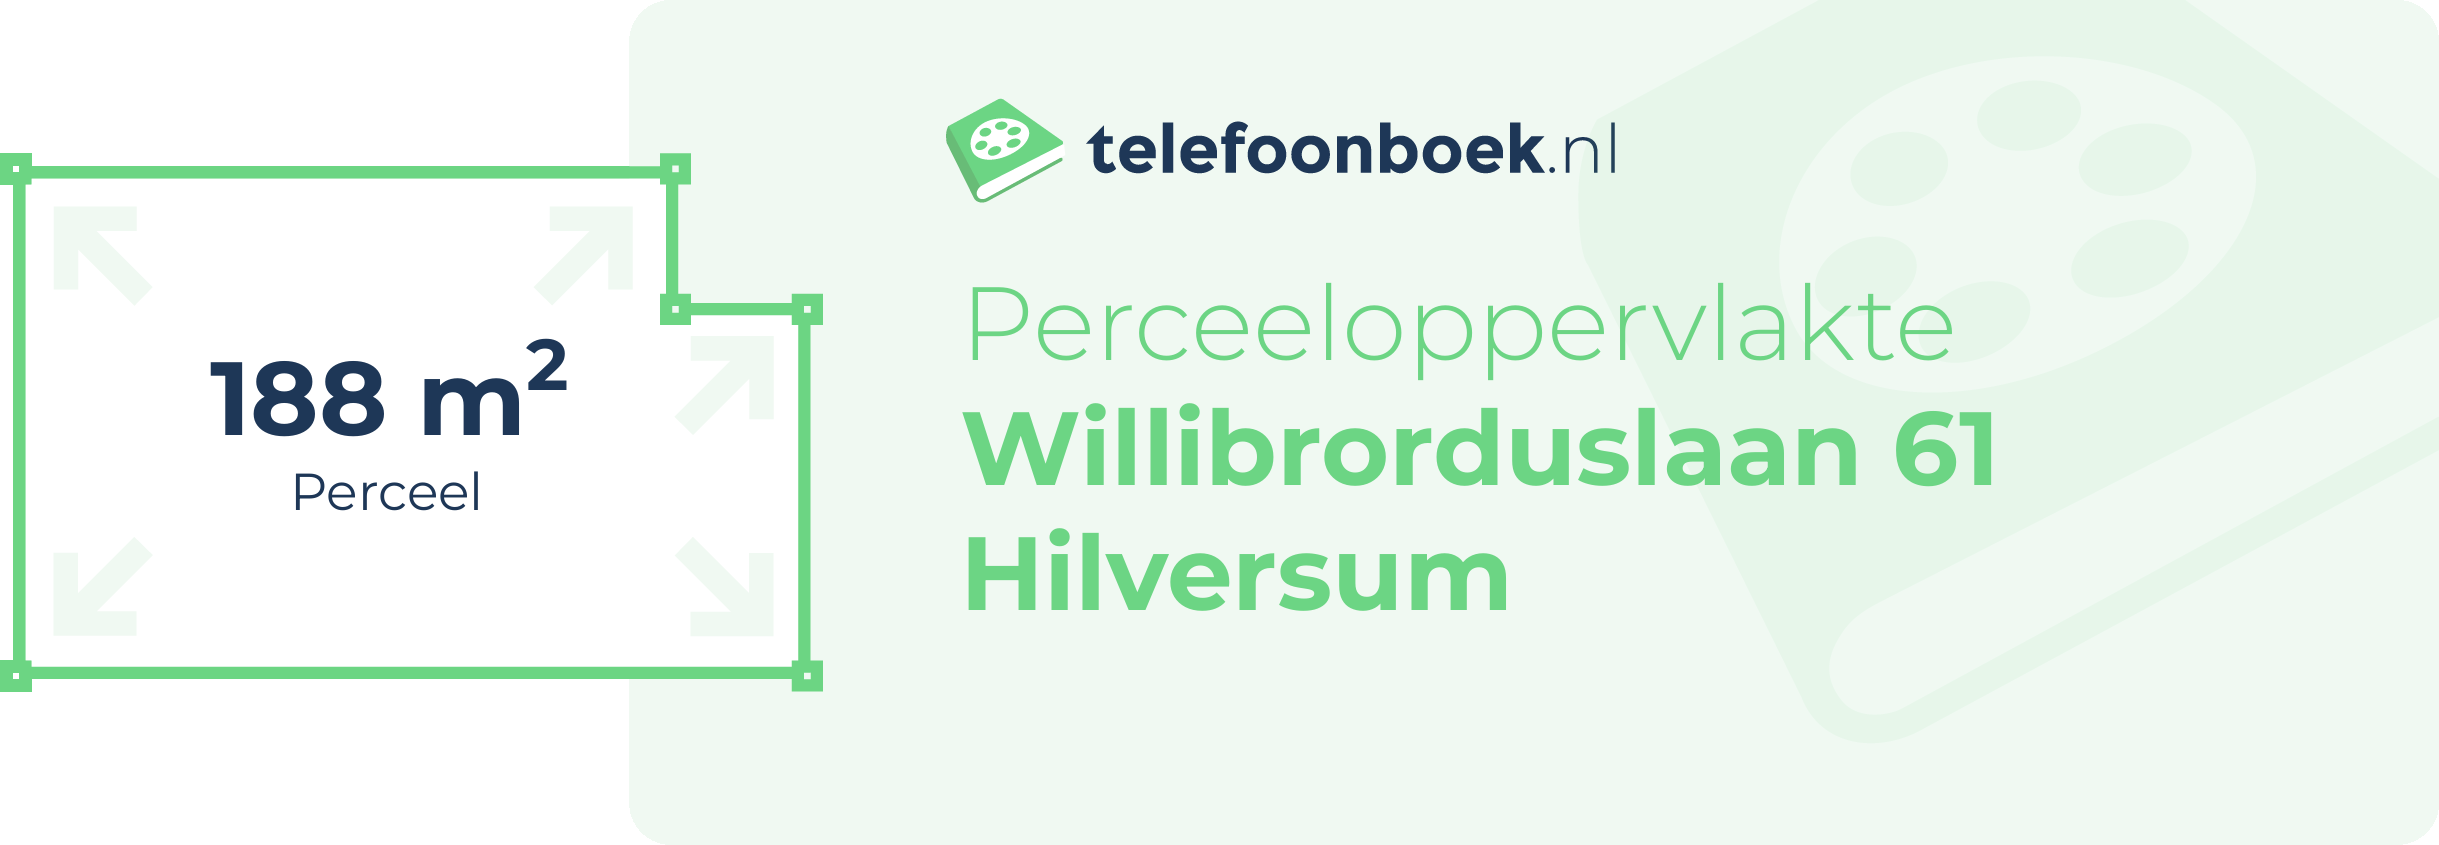 Perceeloppervlakte Willibrorduslaan 61 Hilversum